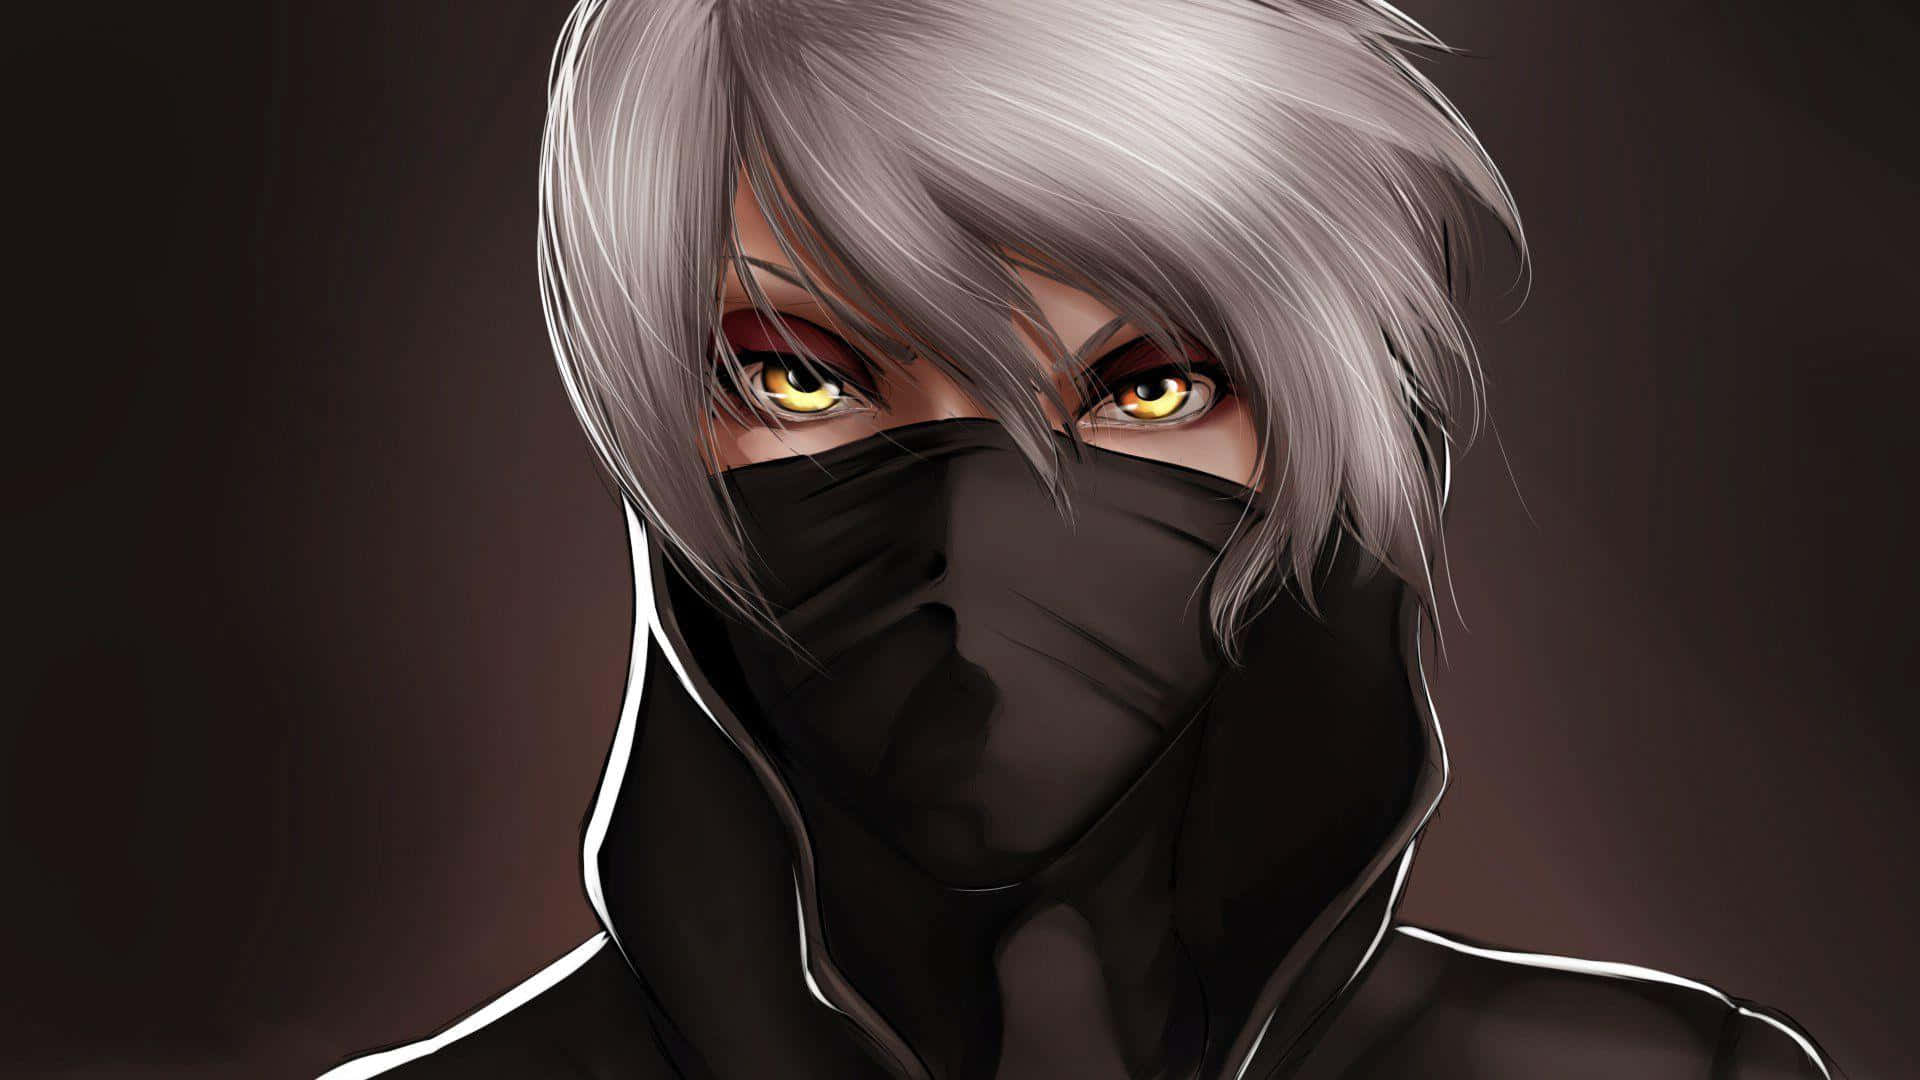 Anime Boy With Black Mask